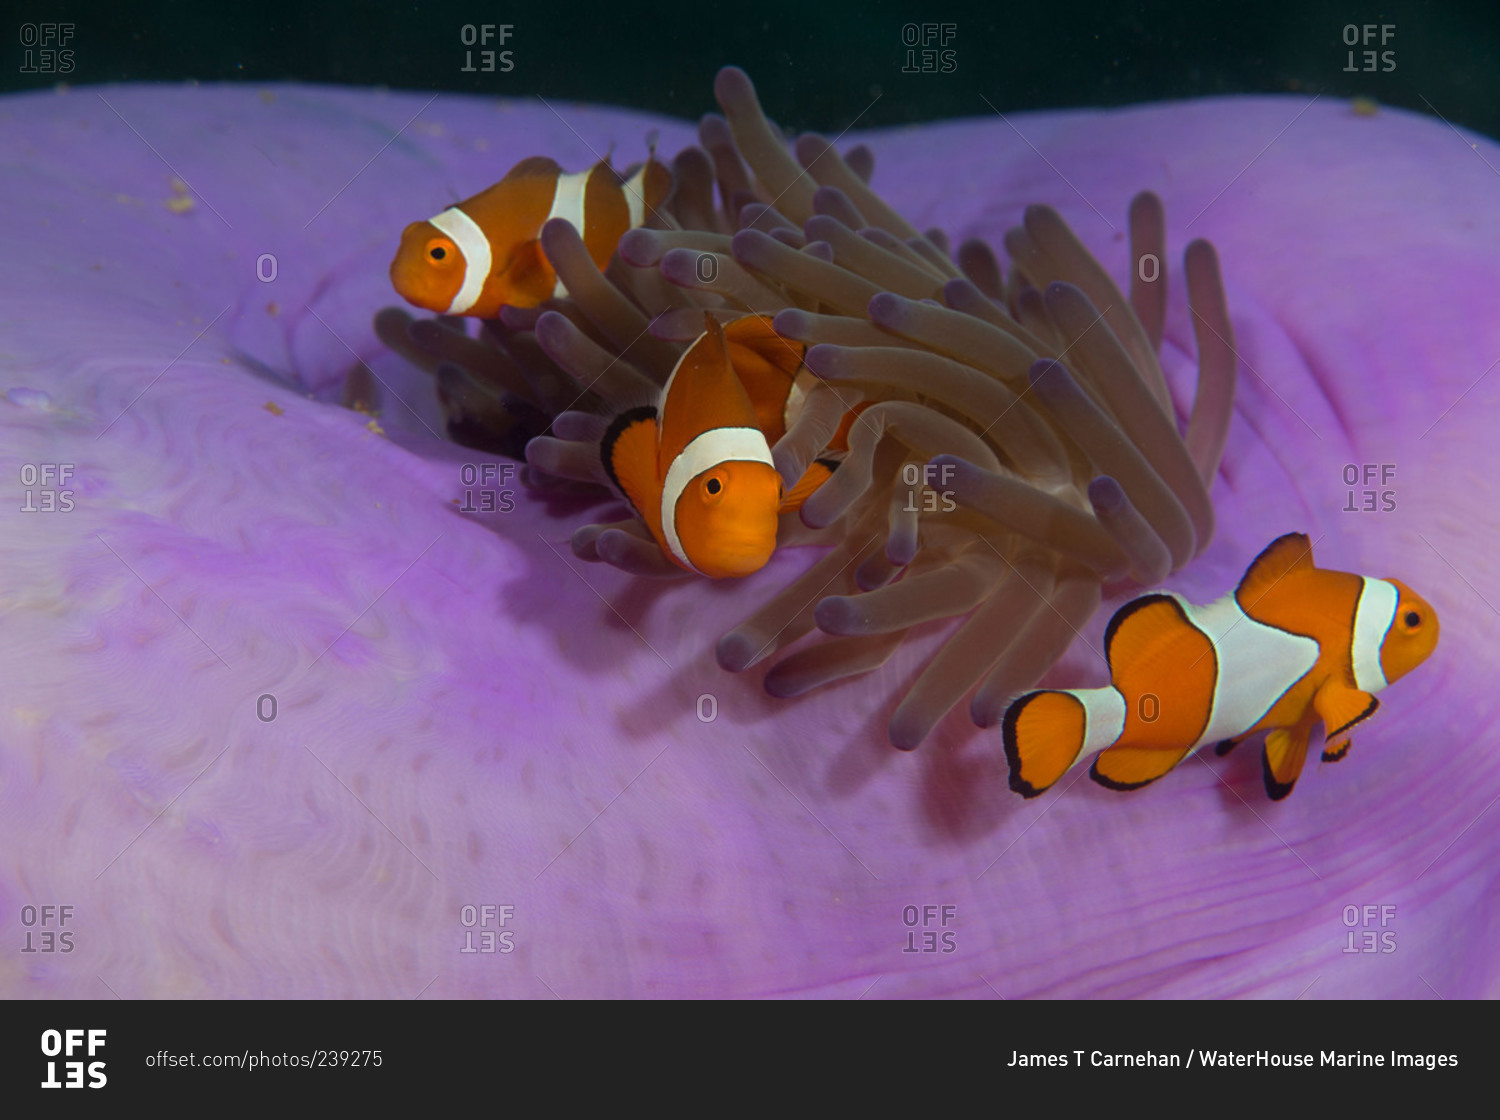 Trio of anemonefish in a magnificent sea anemone